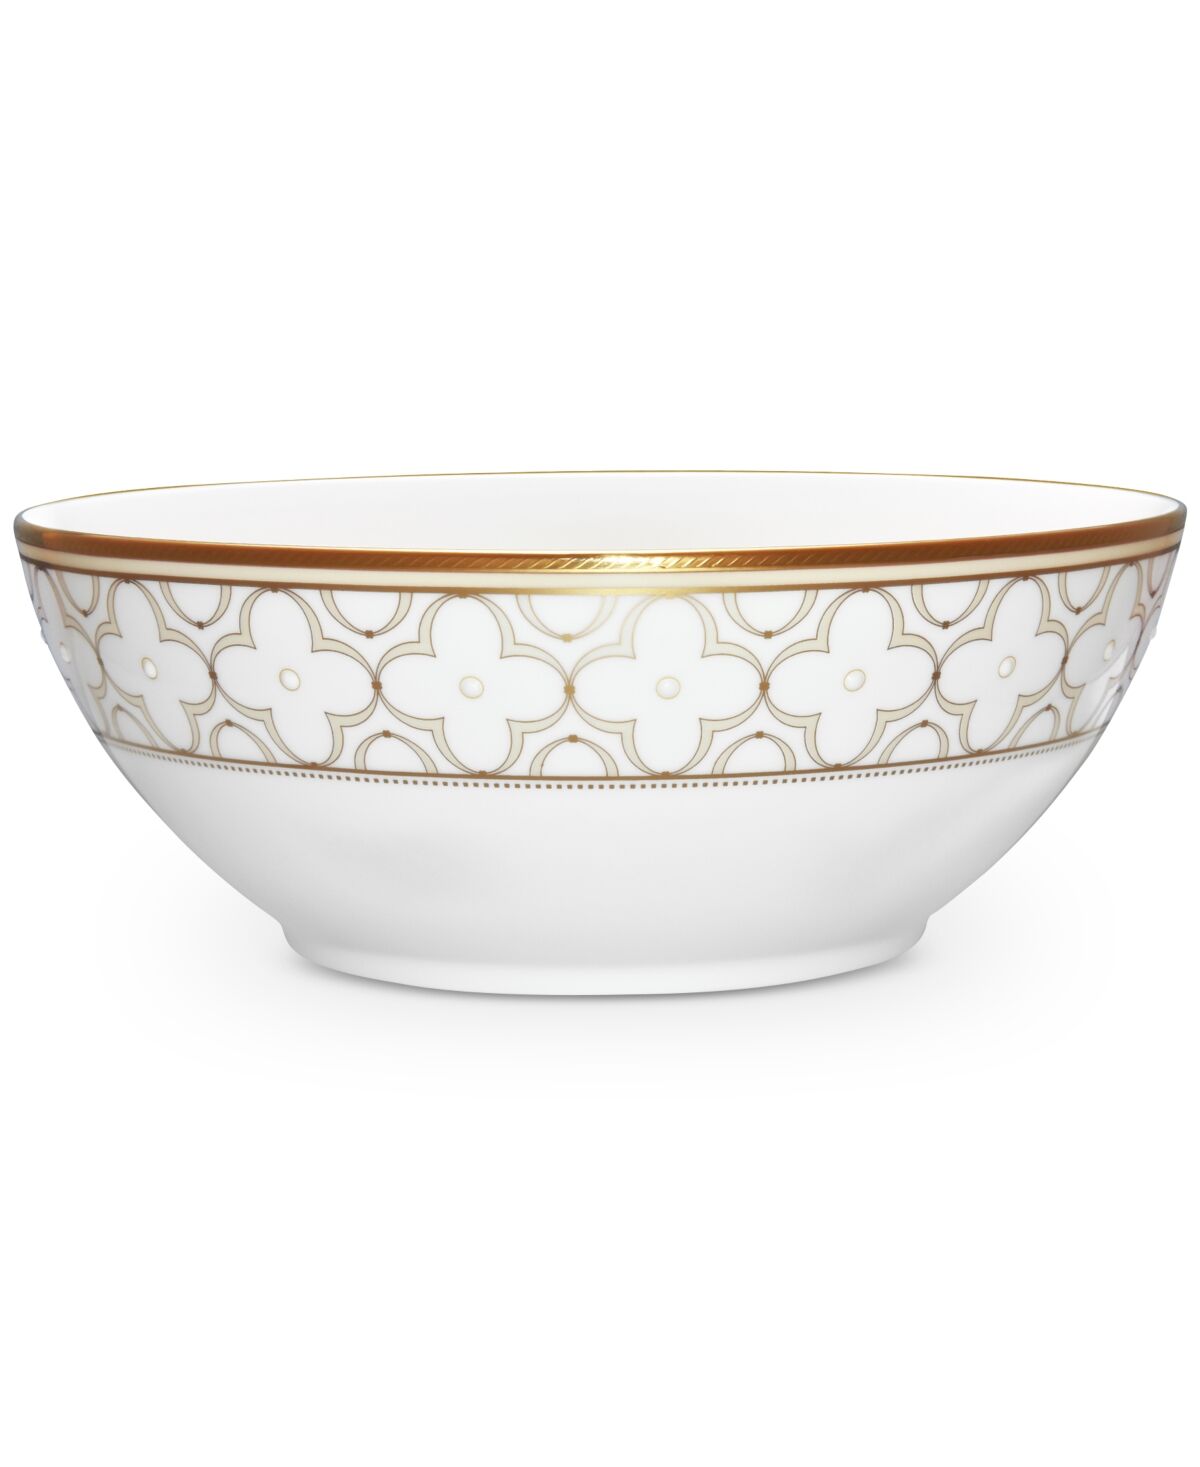 Noritake Trefolio Gold Dinnerware Collection Round Vegetable Bowl - Class Gold